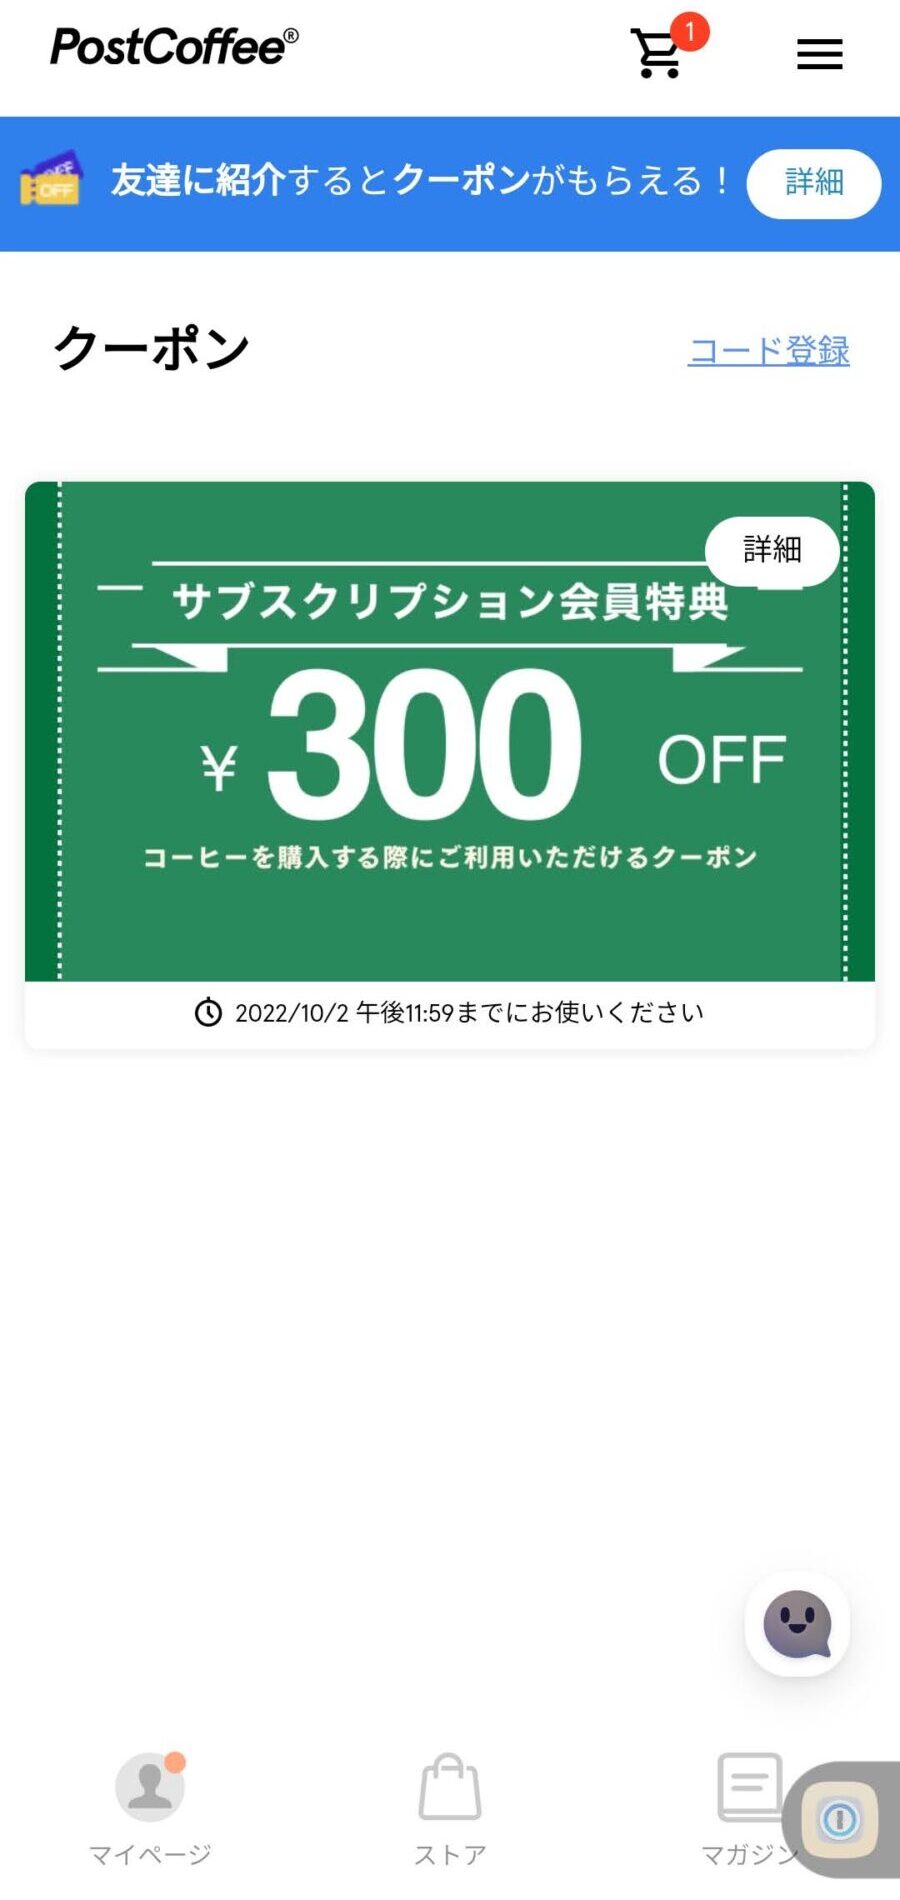 PostCoffee 300円OFFクーポン